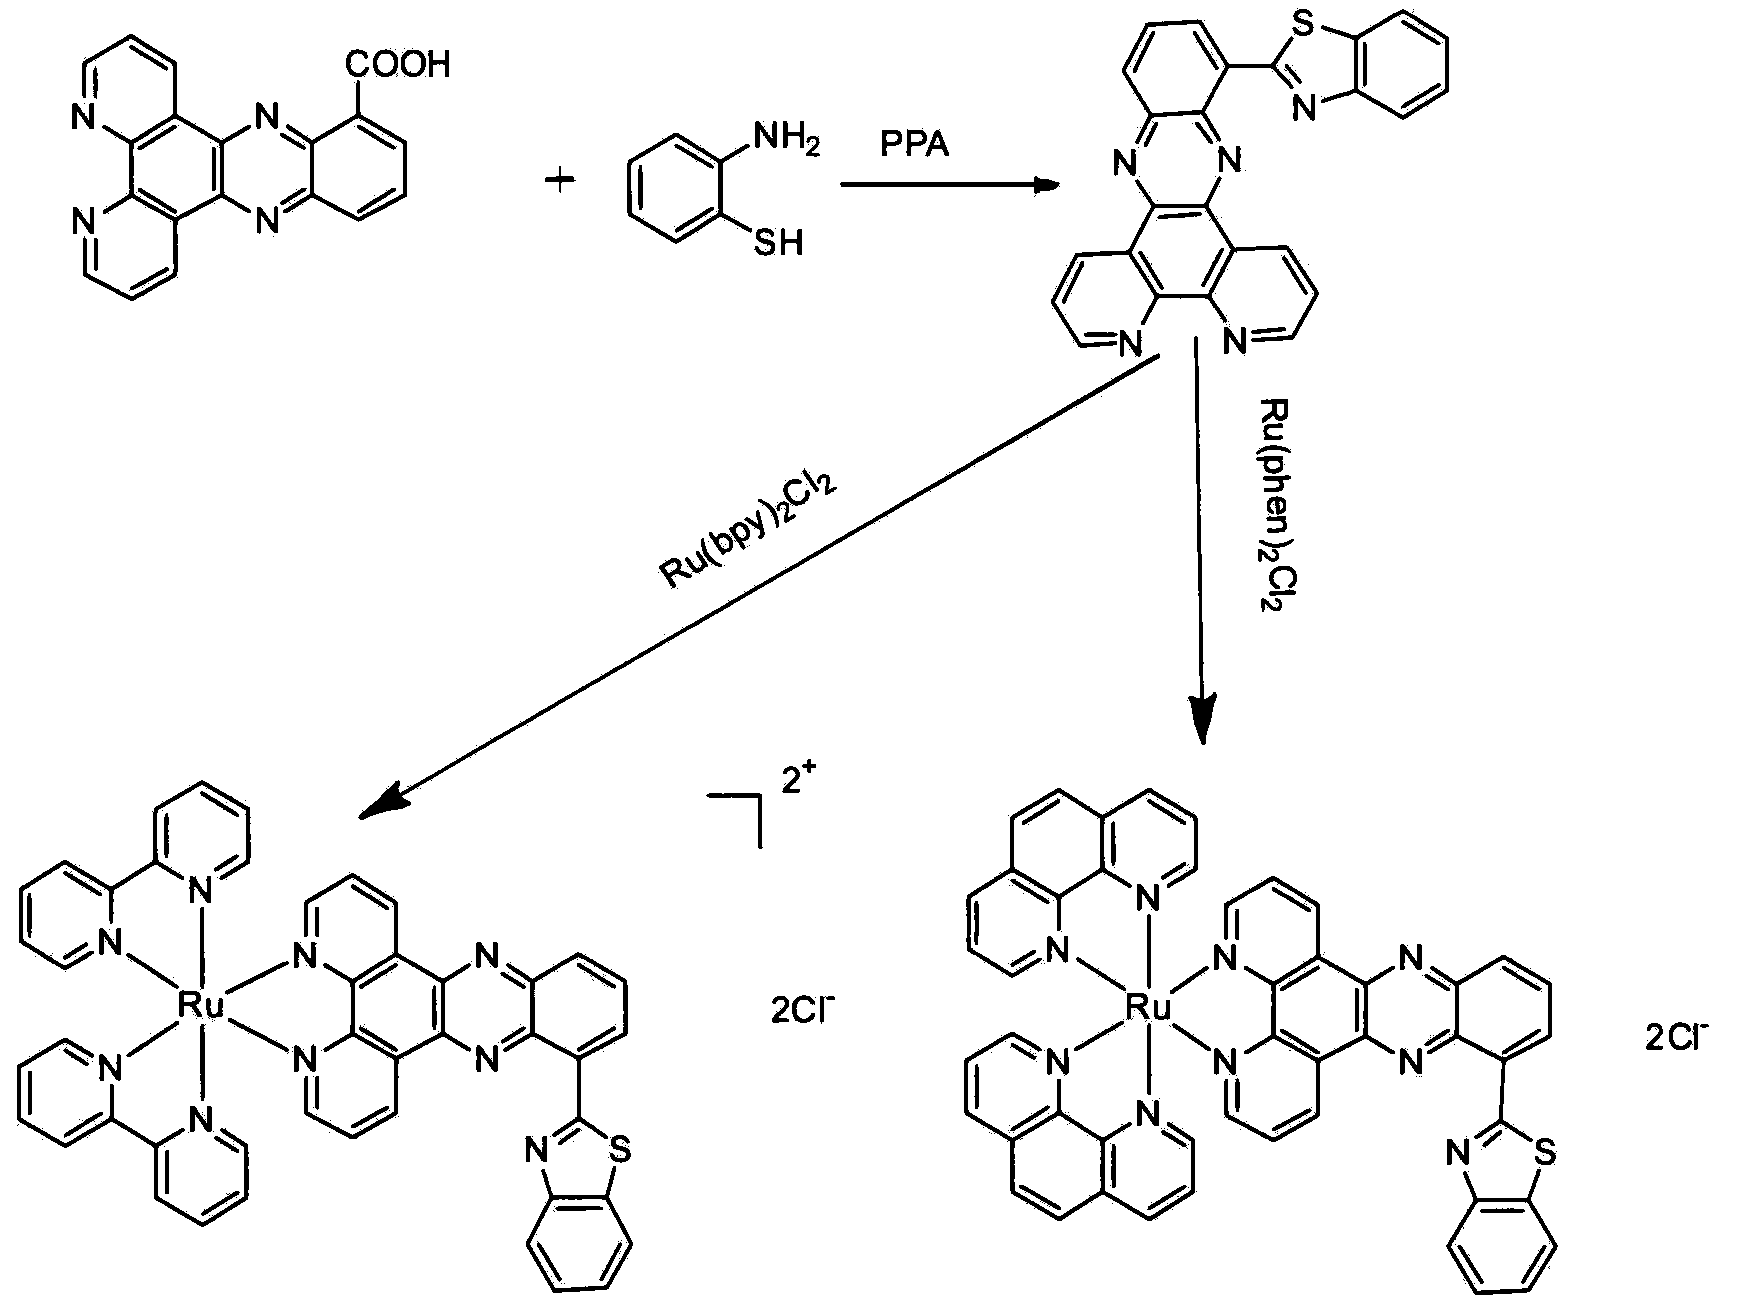 Preparation method and antitumor activity of ruthenium complexes containing benzothiazole